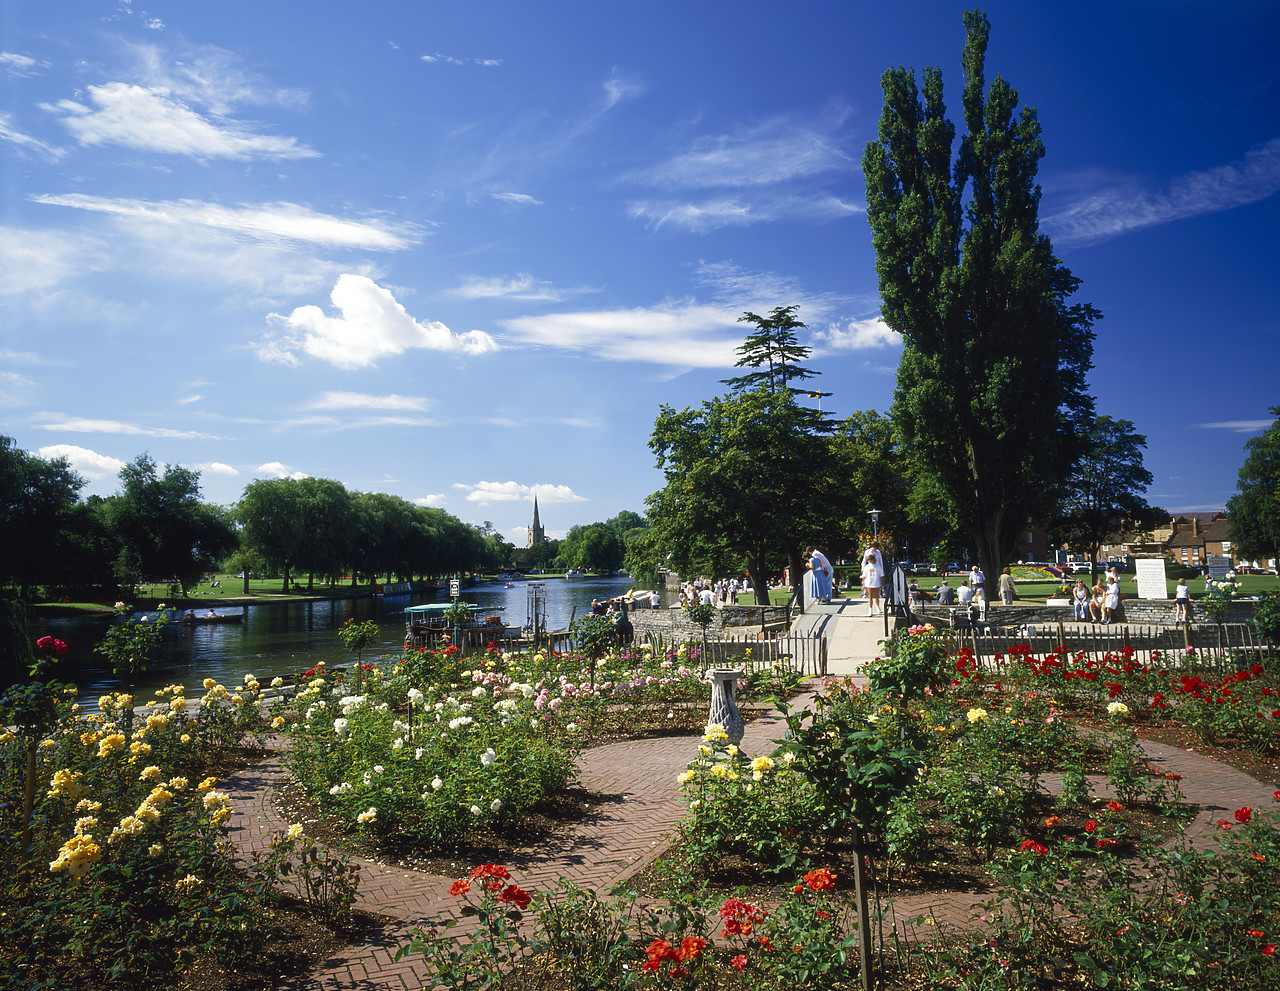 #871012 - Rose Garden along River Avon, Stratford-upon-Avon, Warwickshire, England